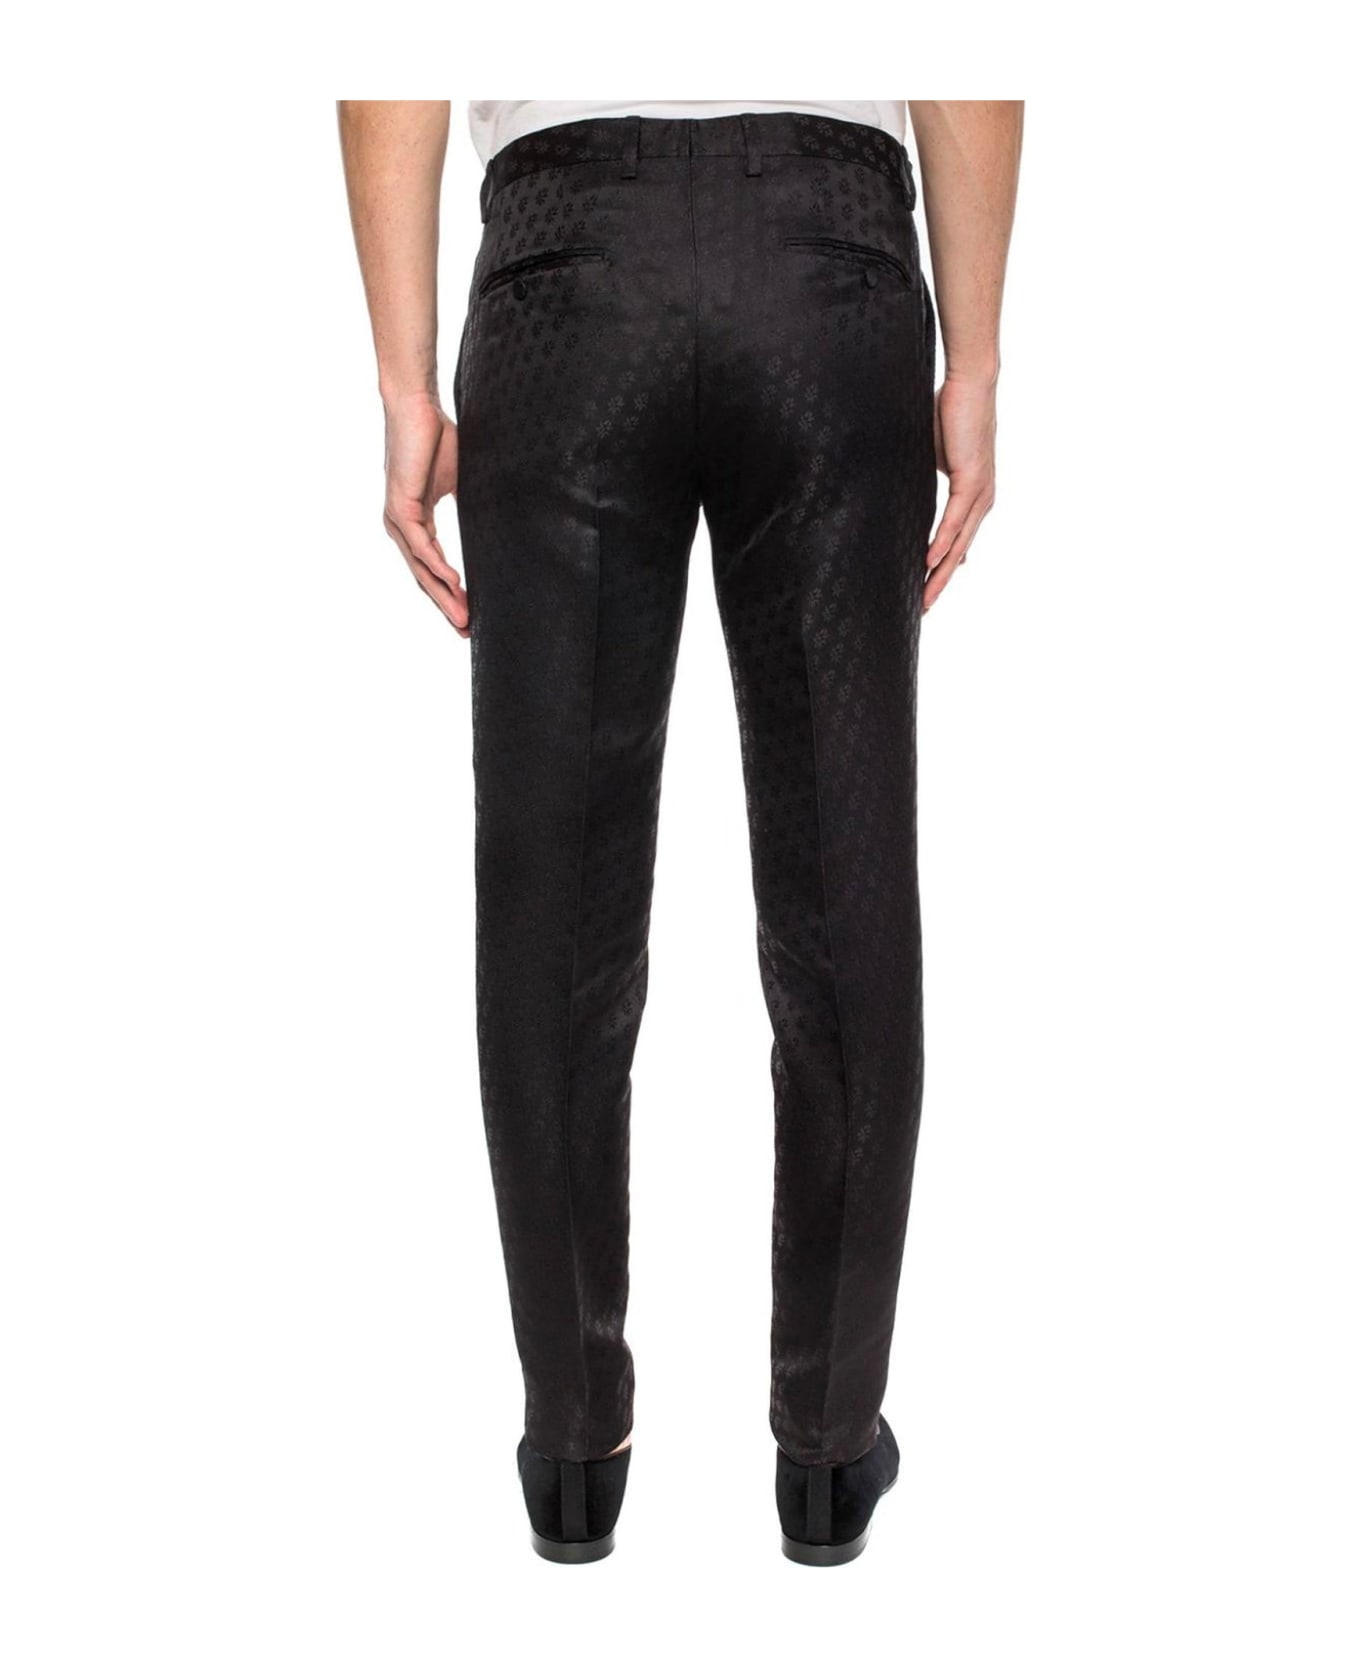 Dolce & Gabbana Jacquard Lurex Trousers - Black